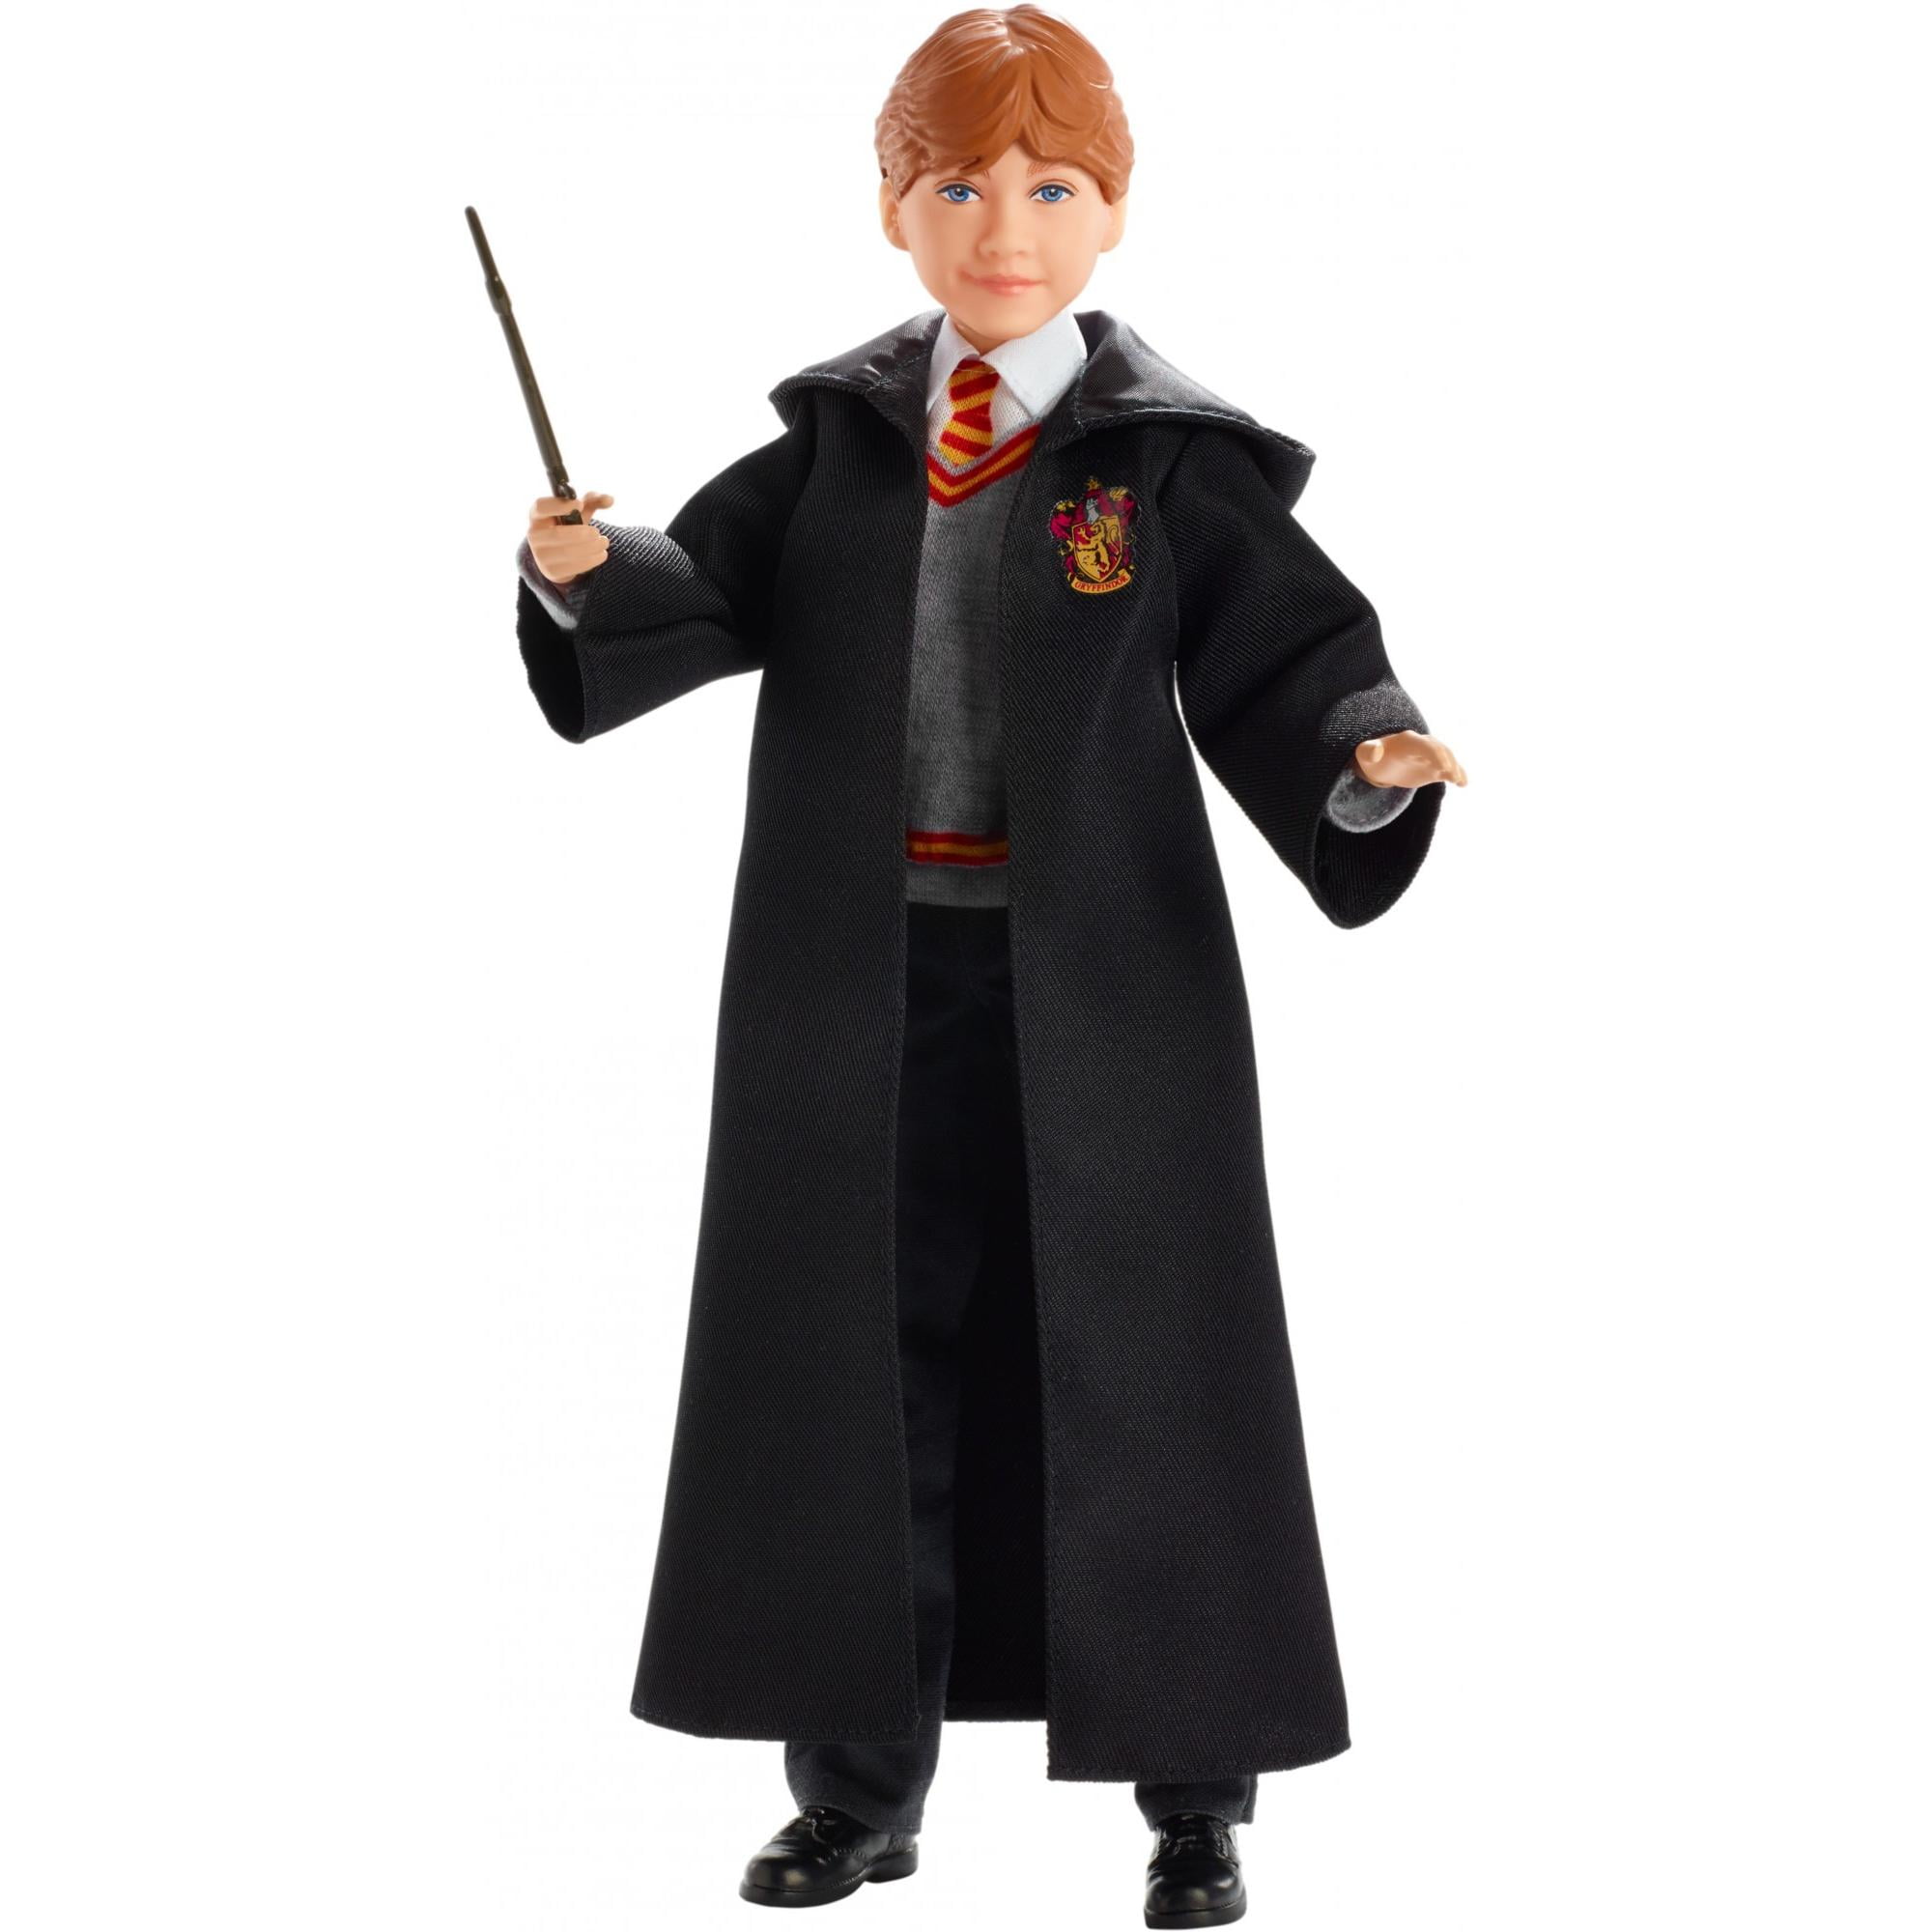 Harry Potter Toys Figurines Mattel Merchandise 6 Dolls Hermione Ron Collectibles for sale online